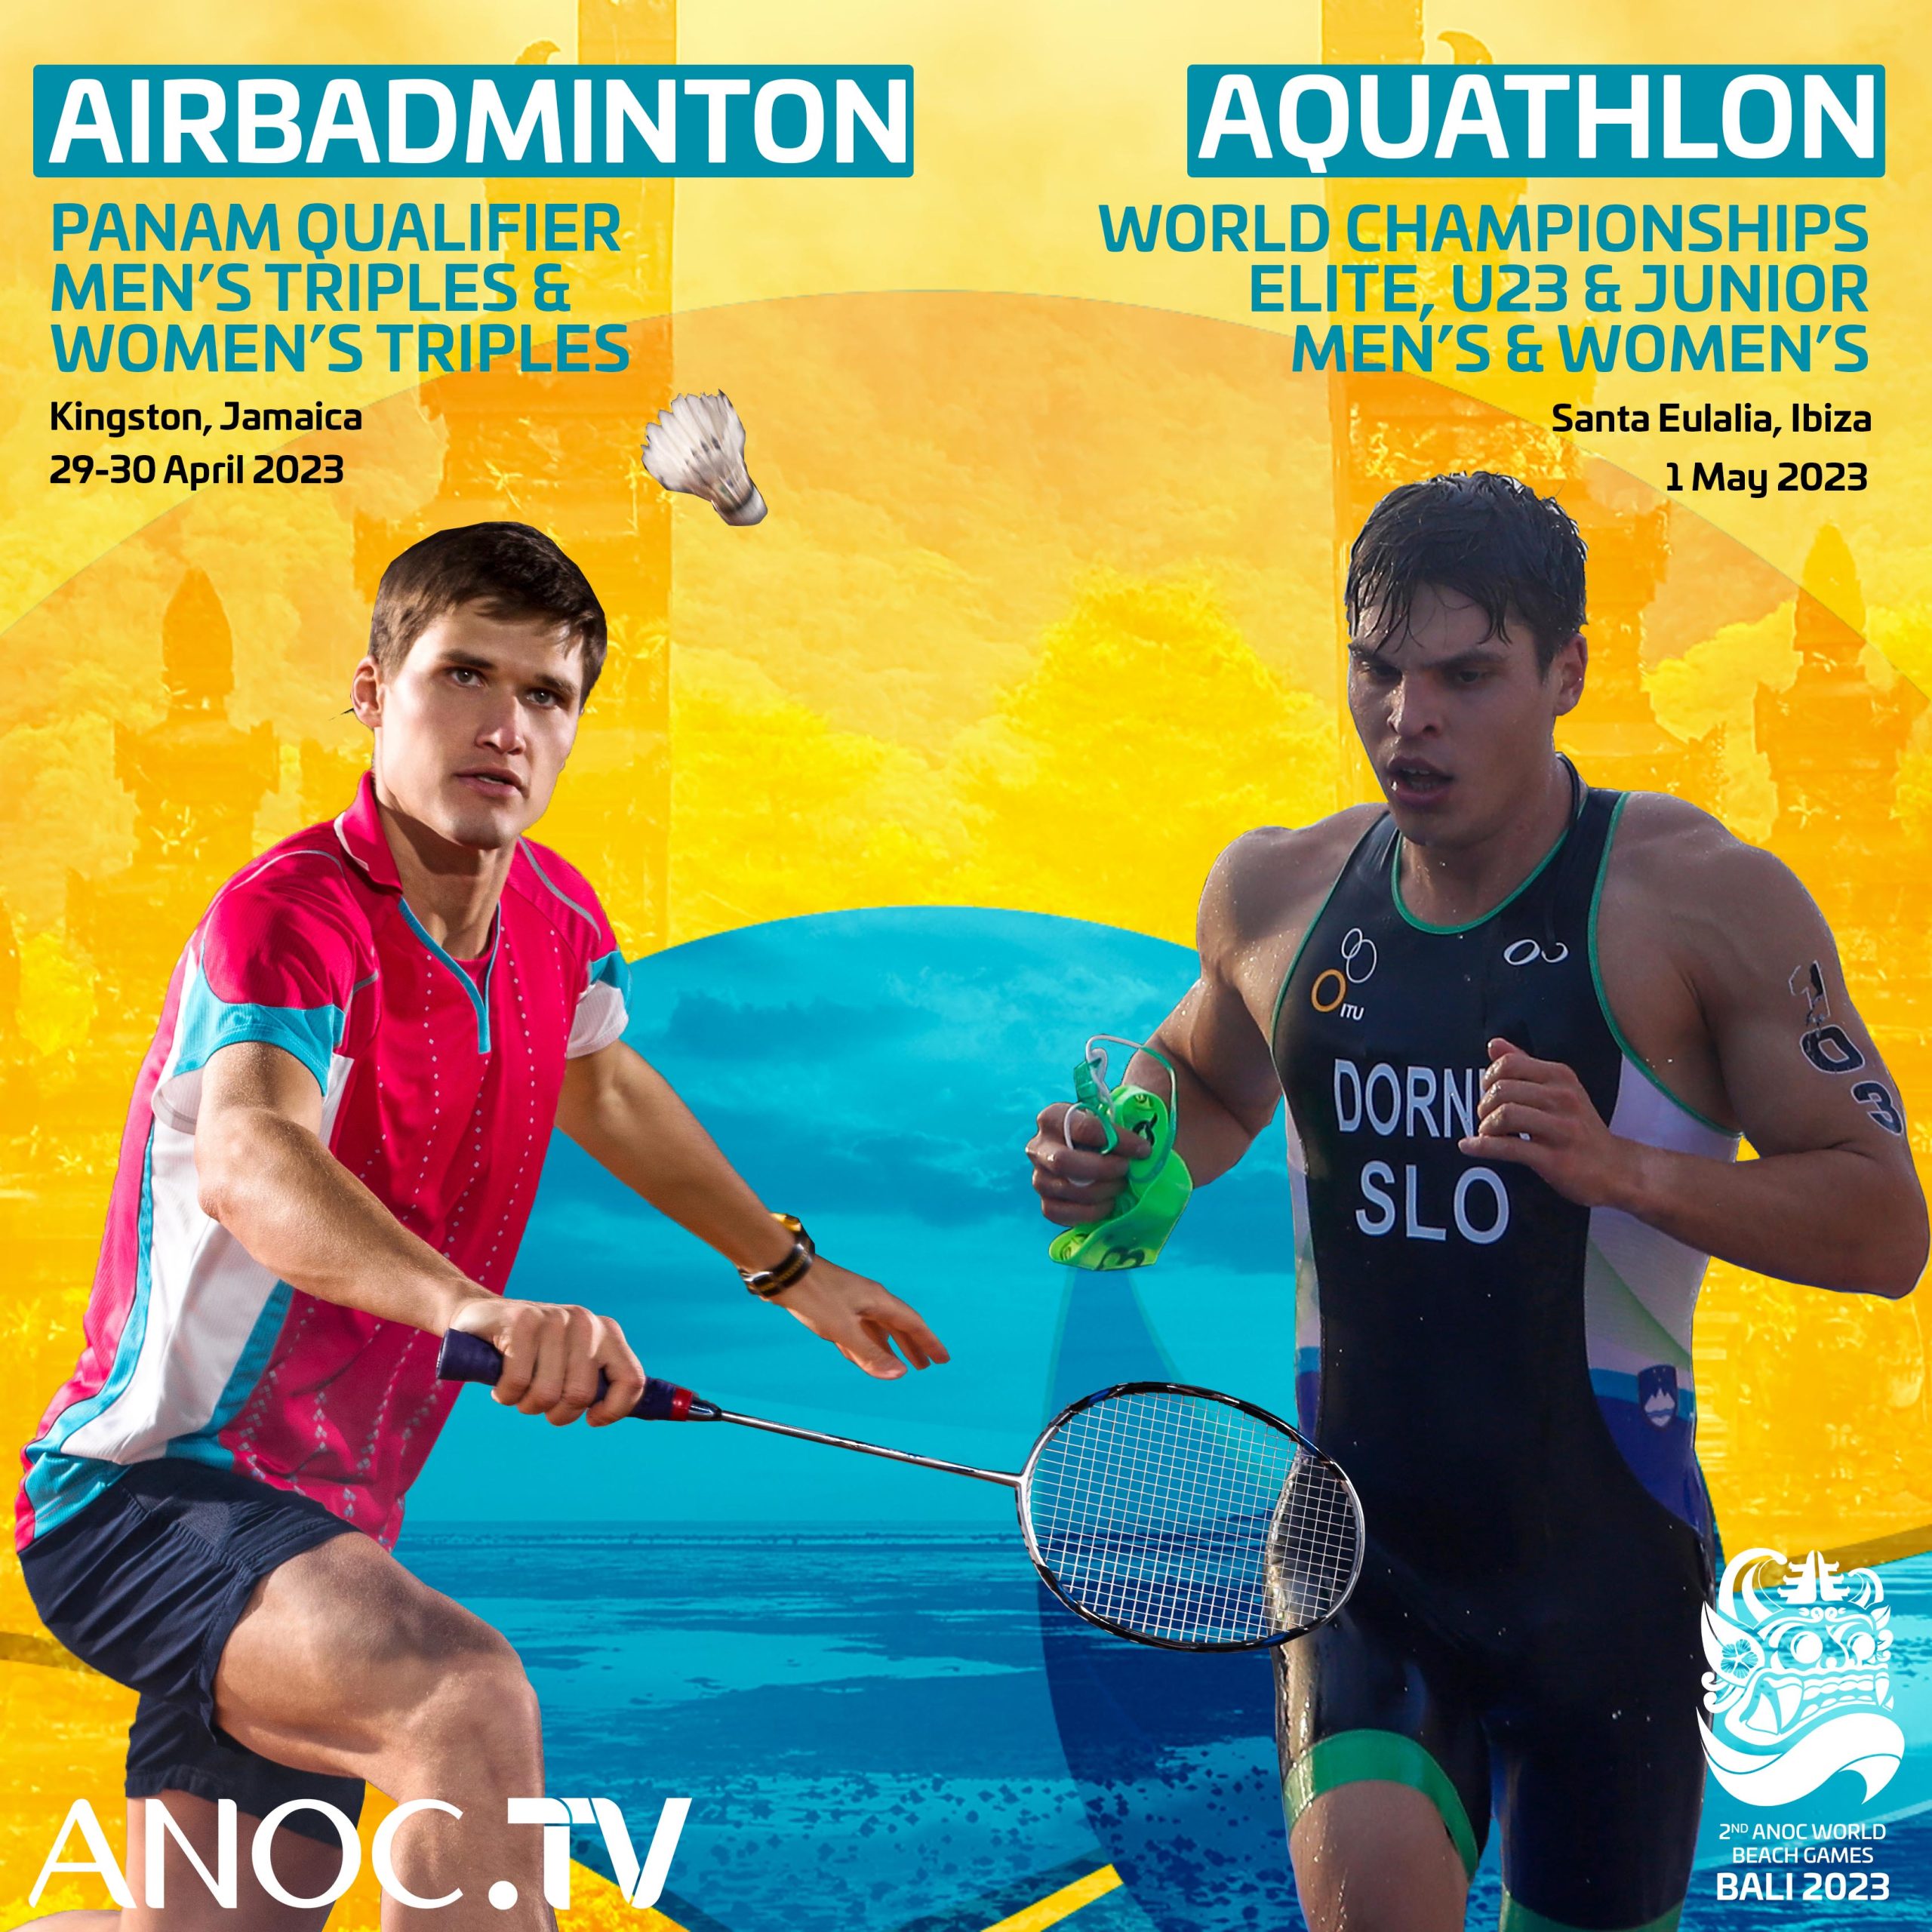 Watch AirBadminton and Aquathlon live on ANOC! ANOC